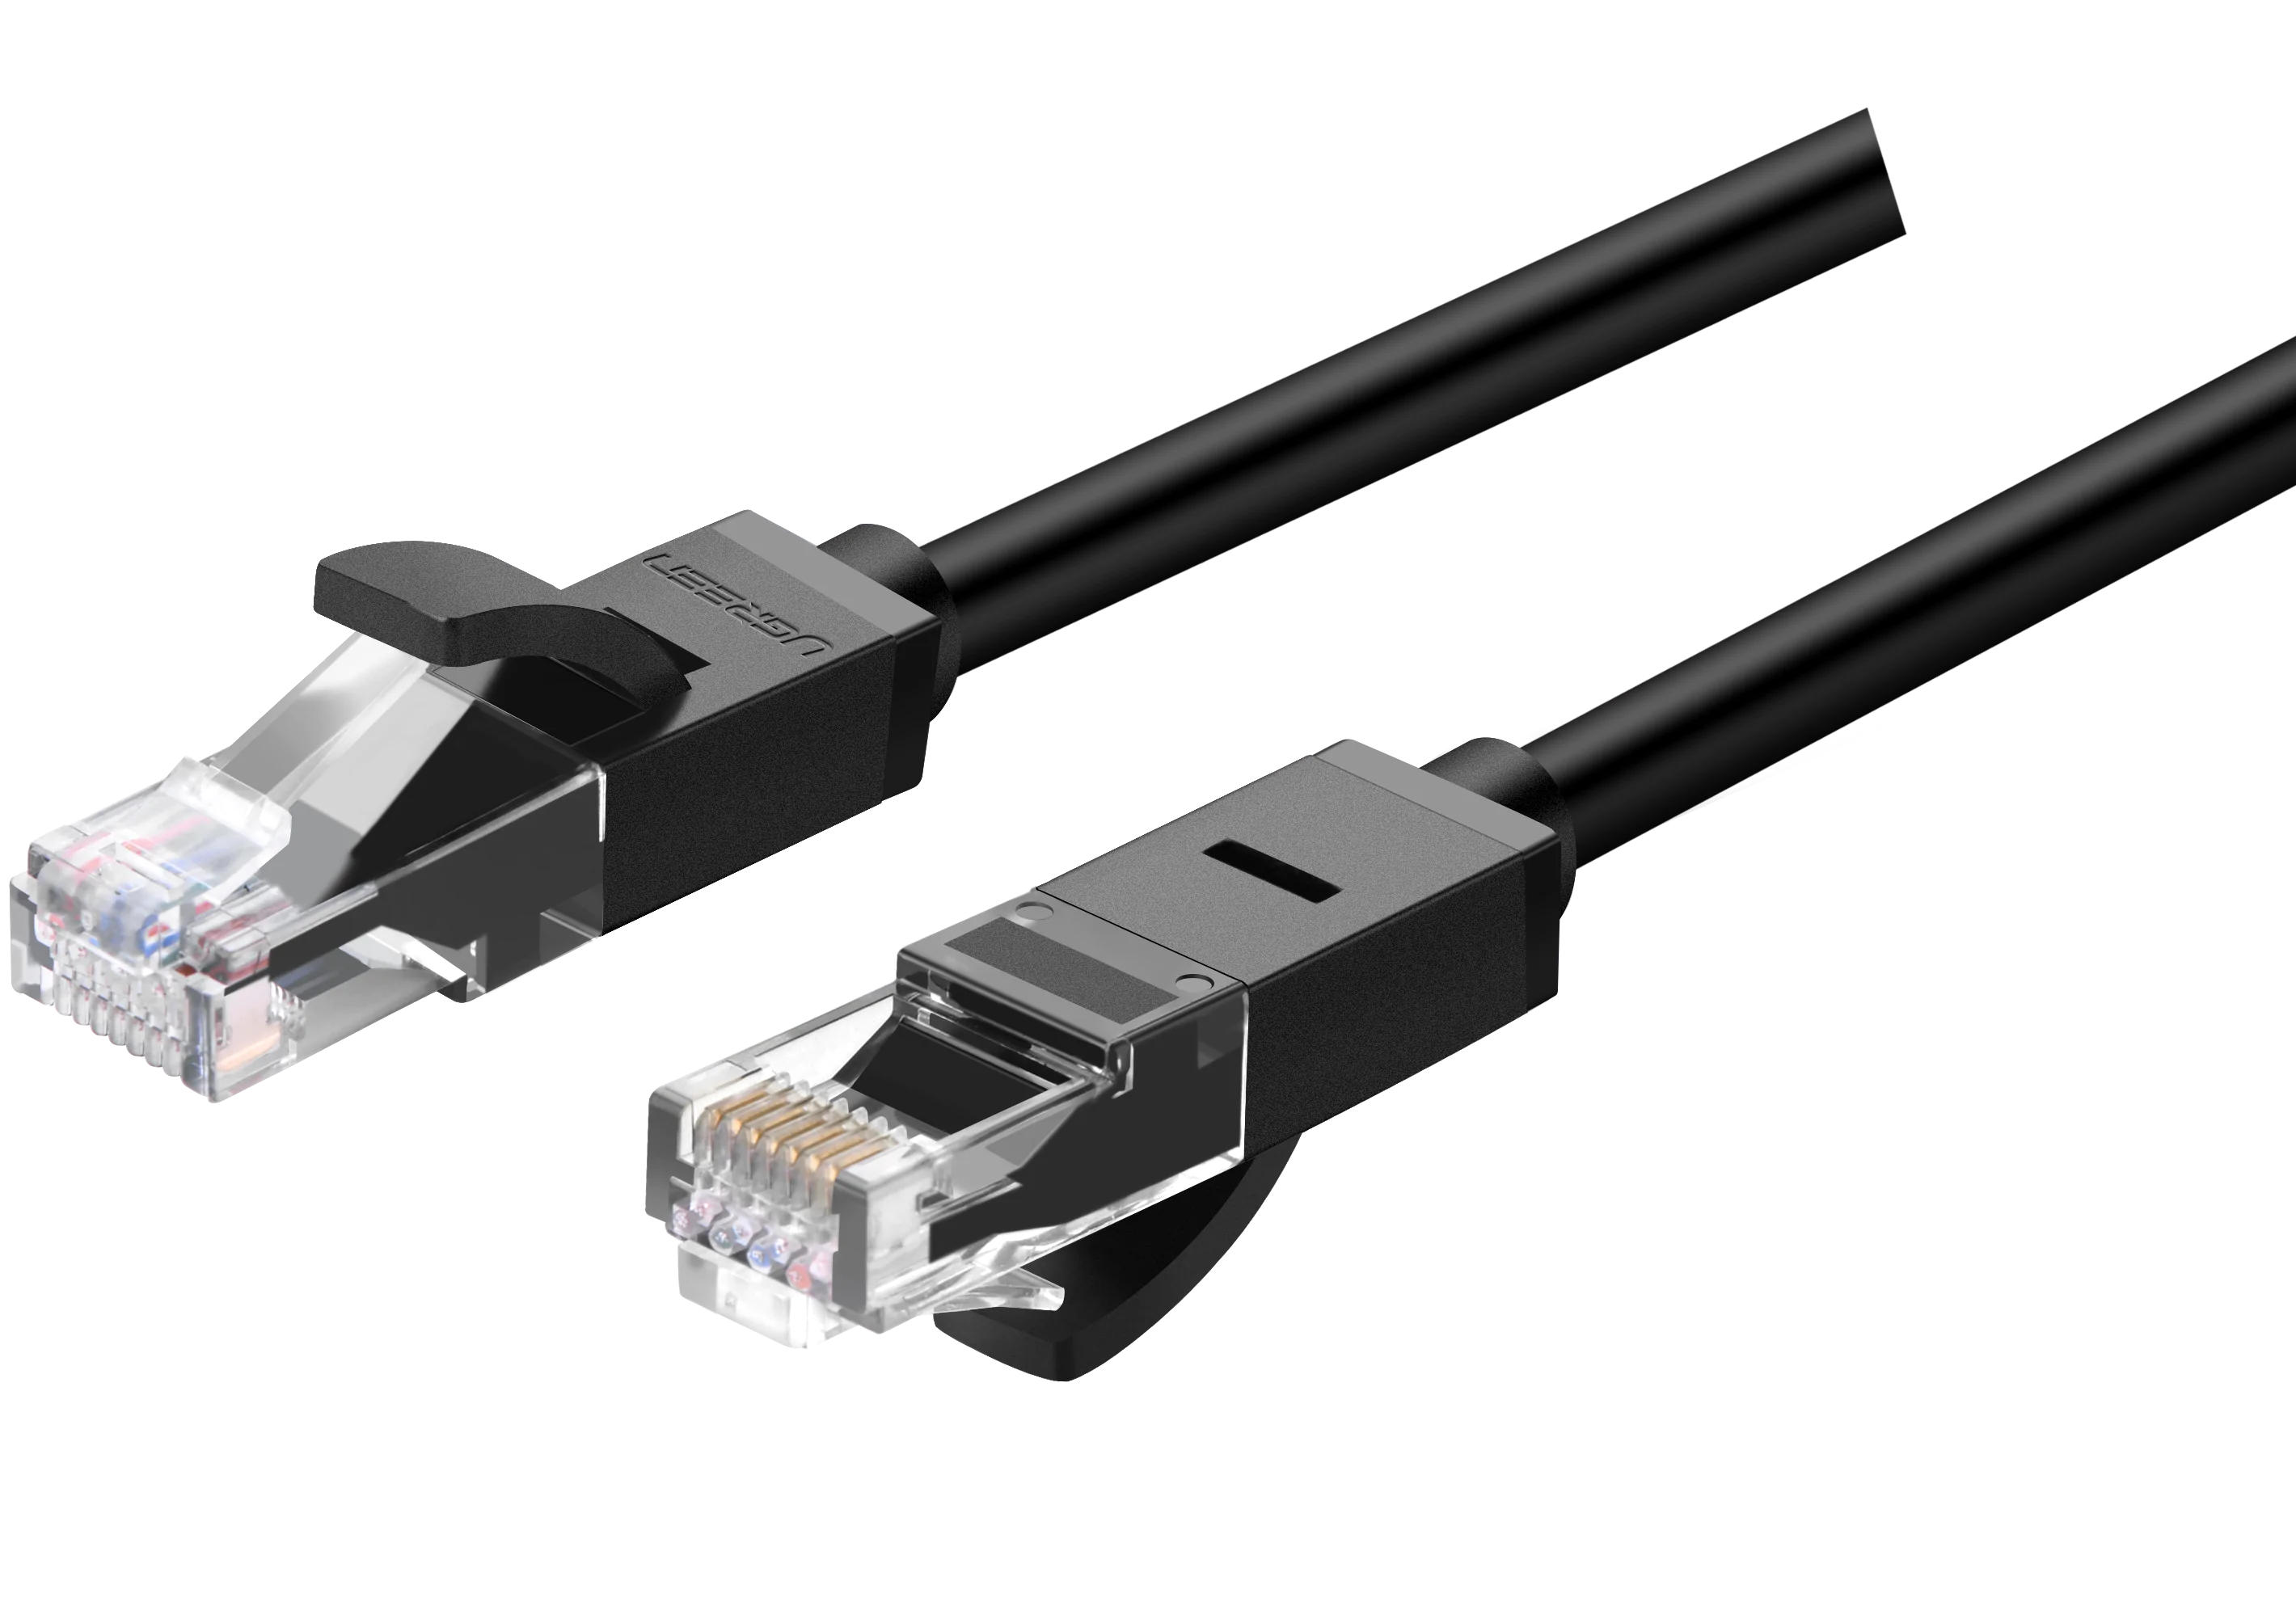 UGREEN Cat6 UTP Ethernet Cable 1m